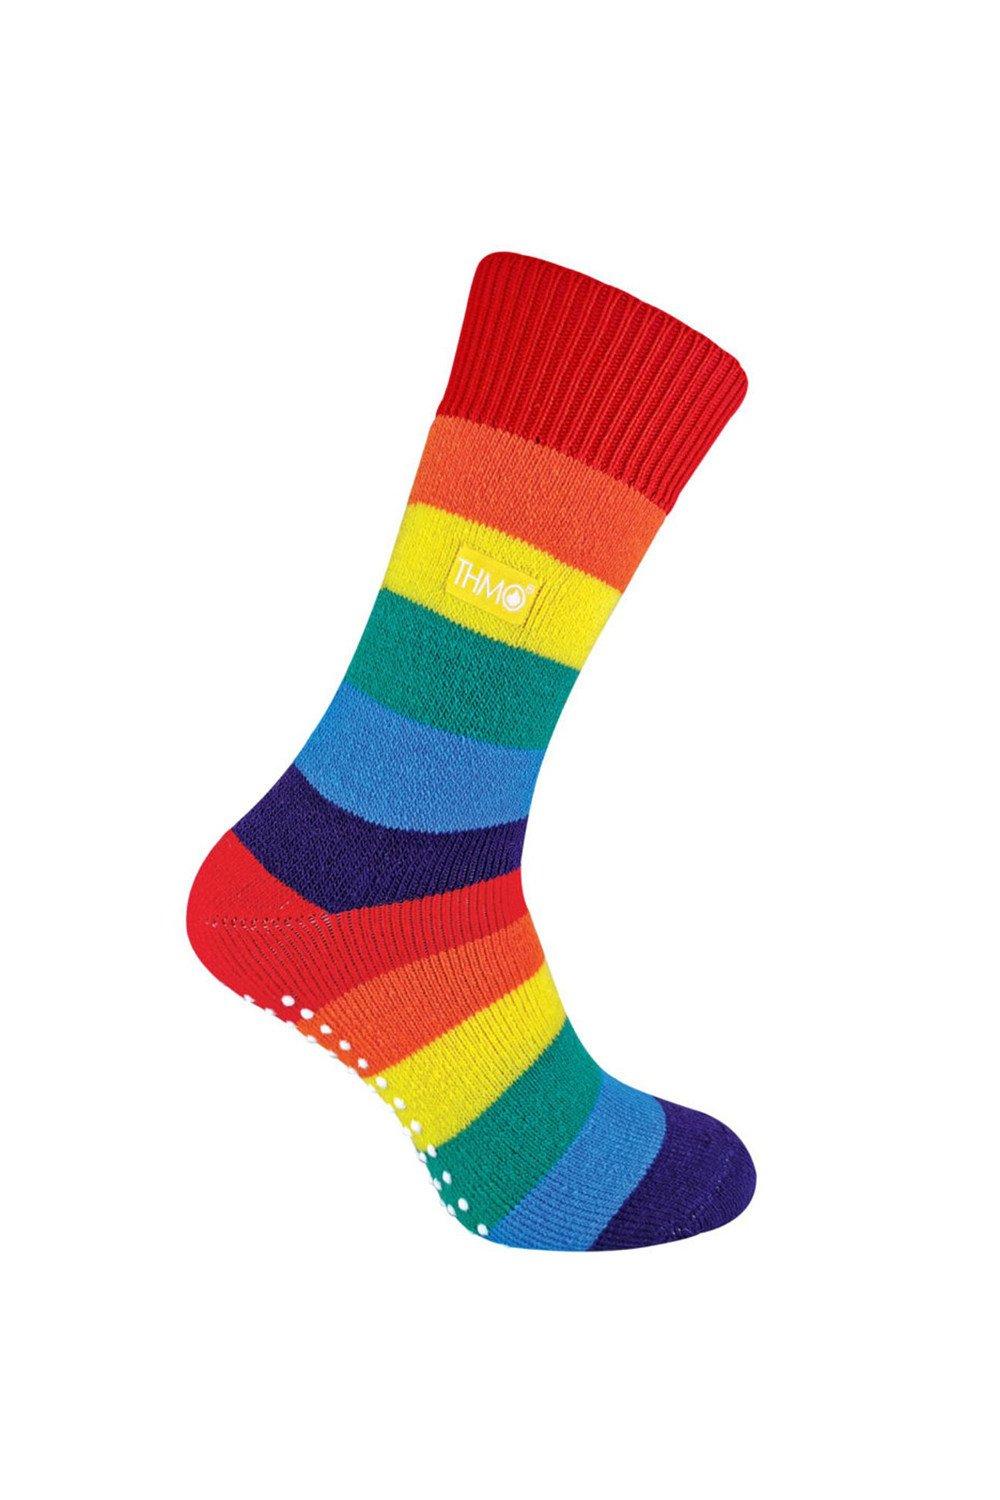 Warm Thermal Non Slip Rainbow Socks for Winter